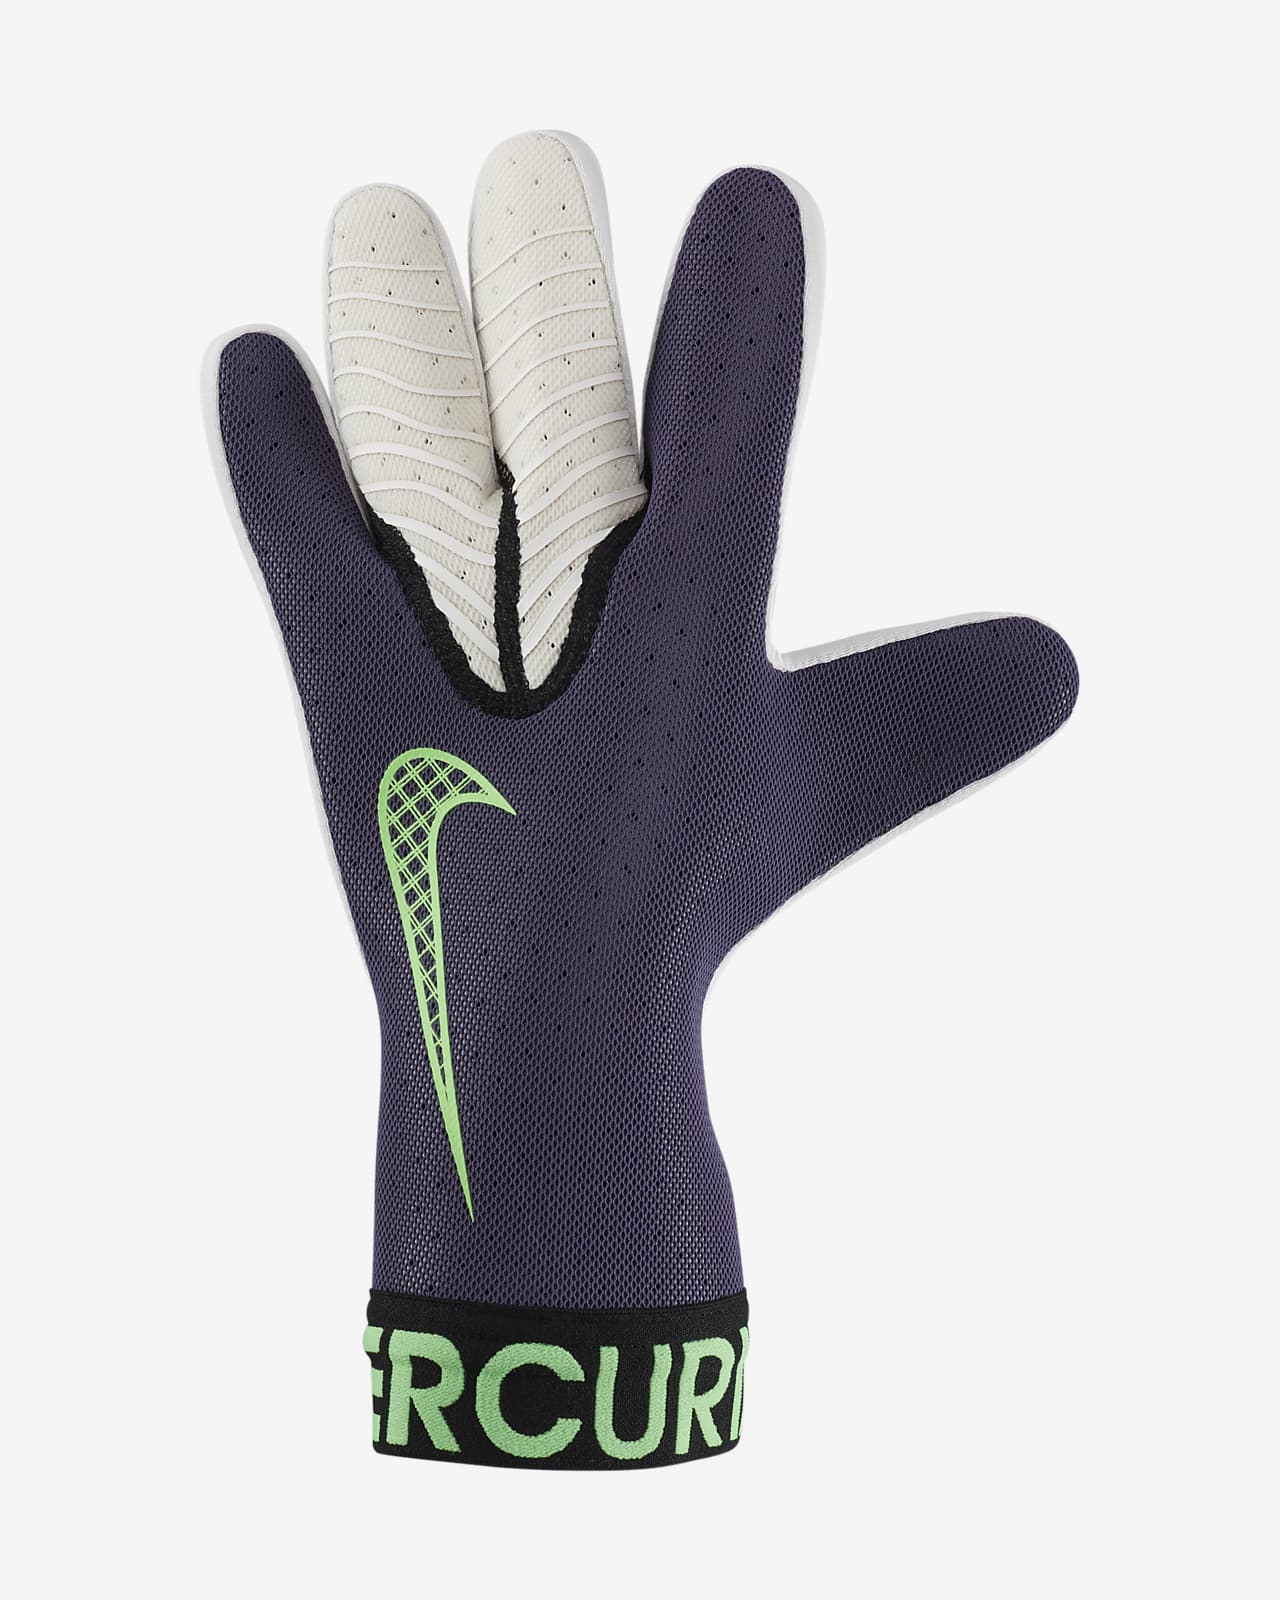 nike touch elite gloves